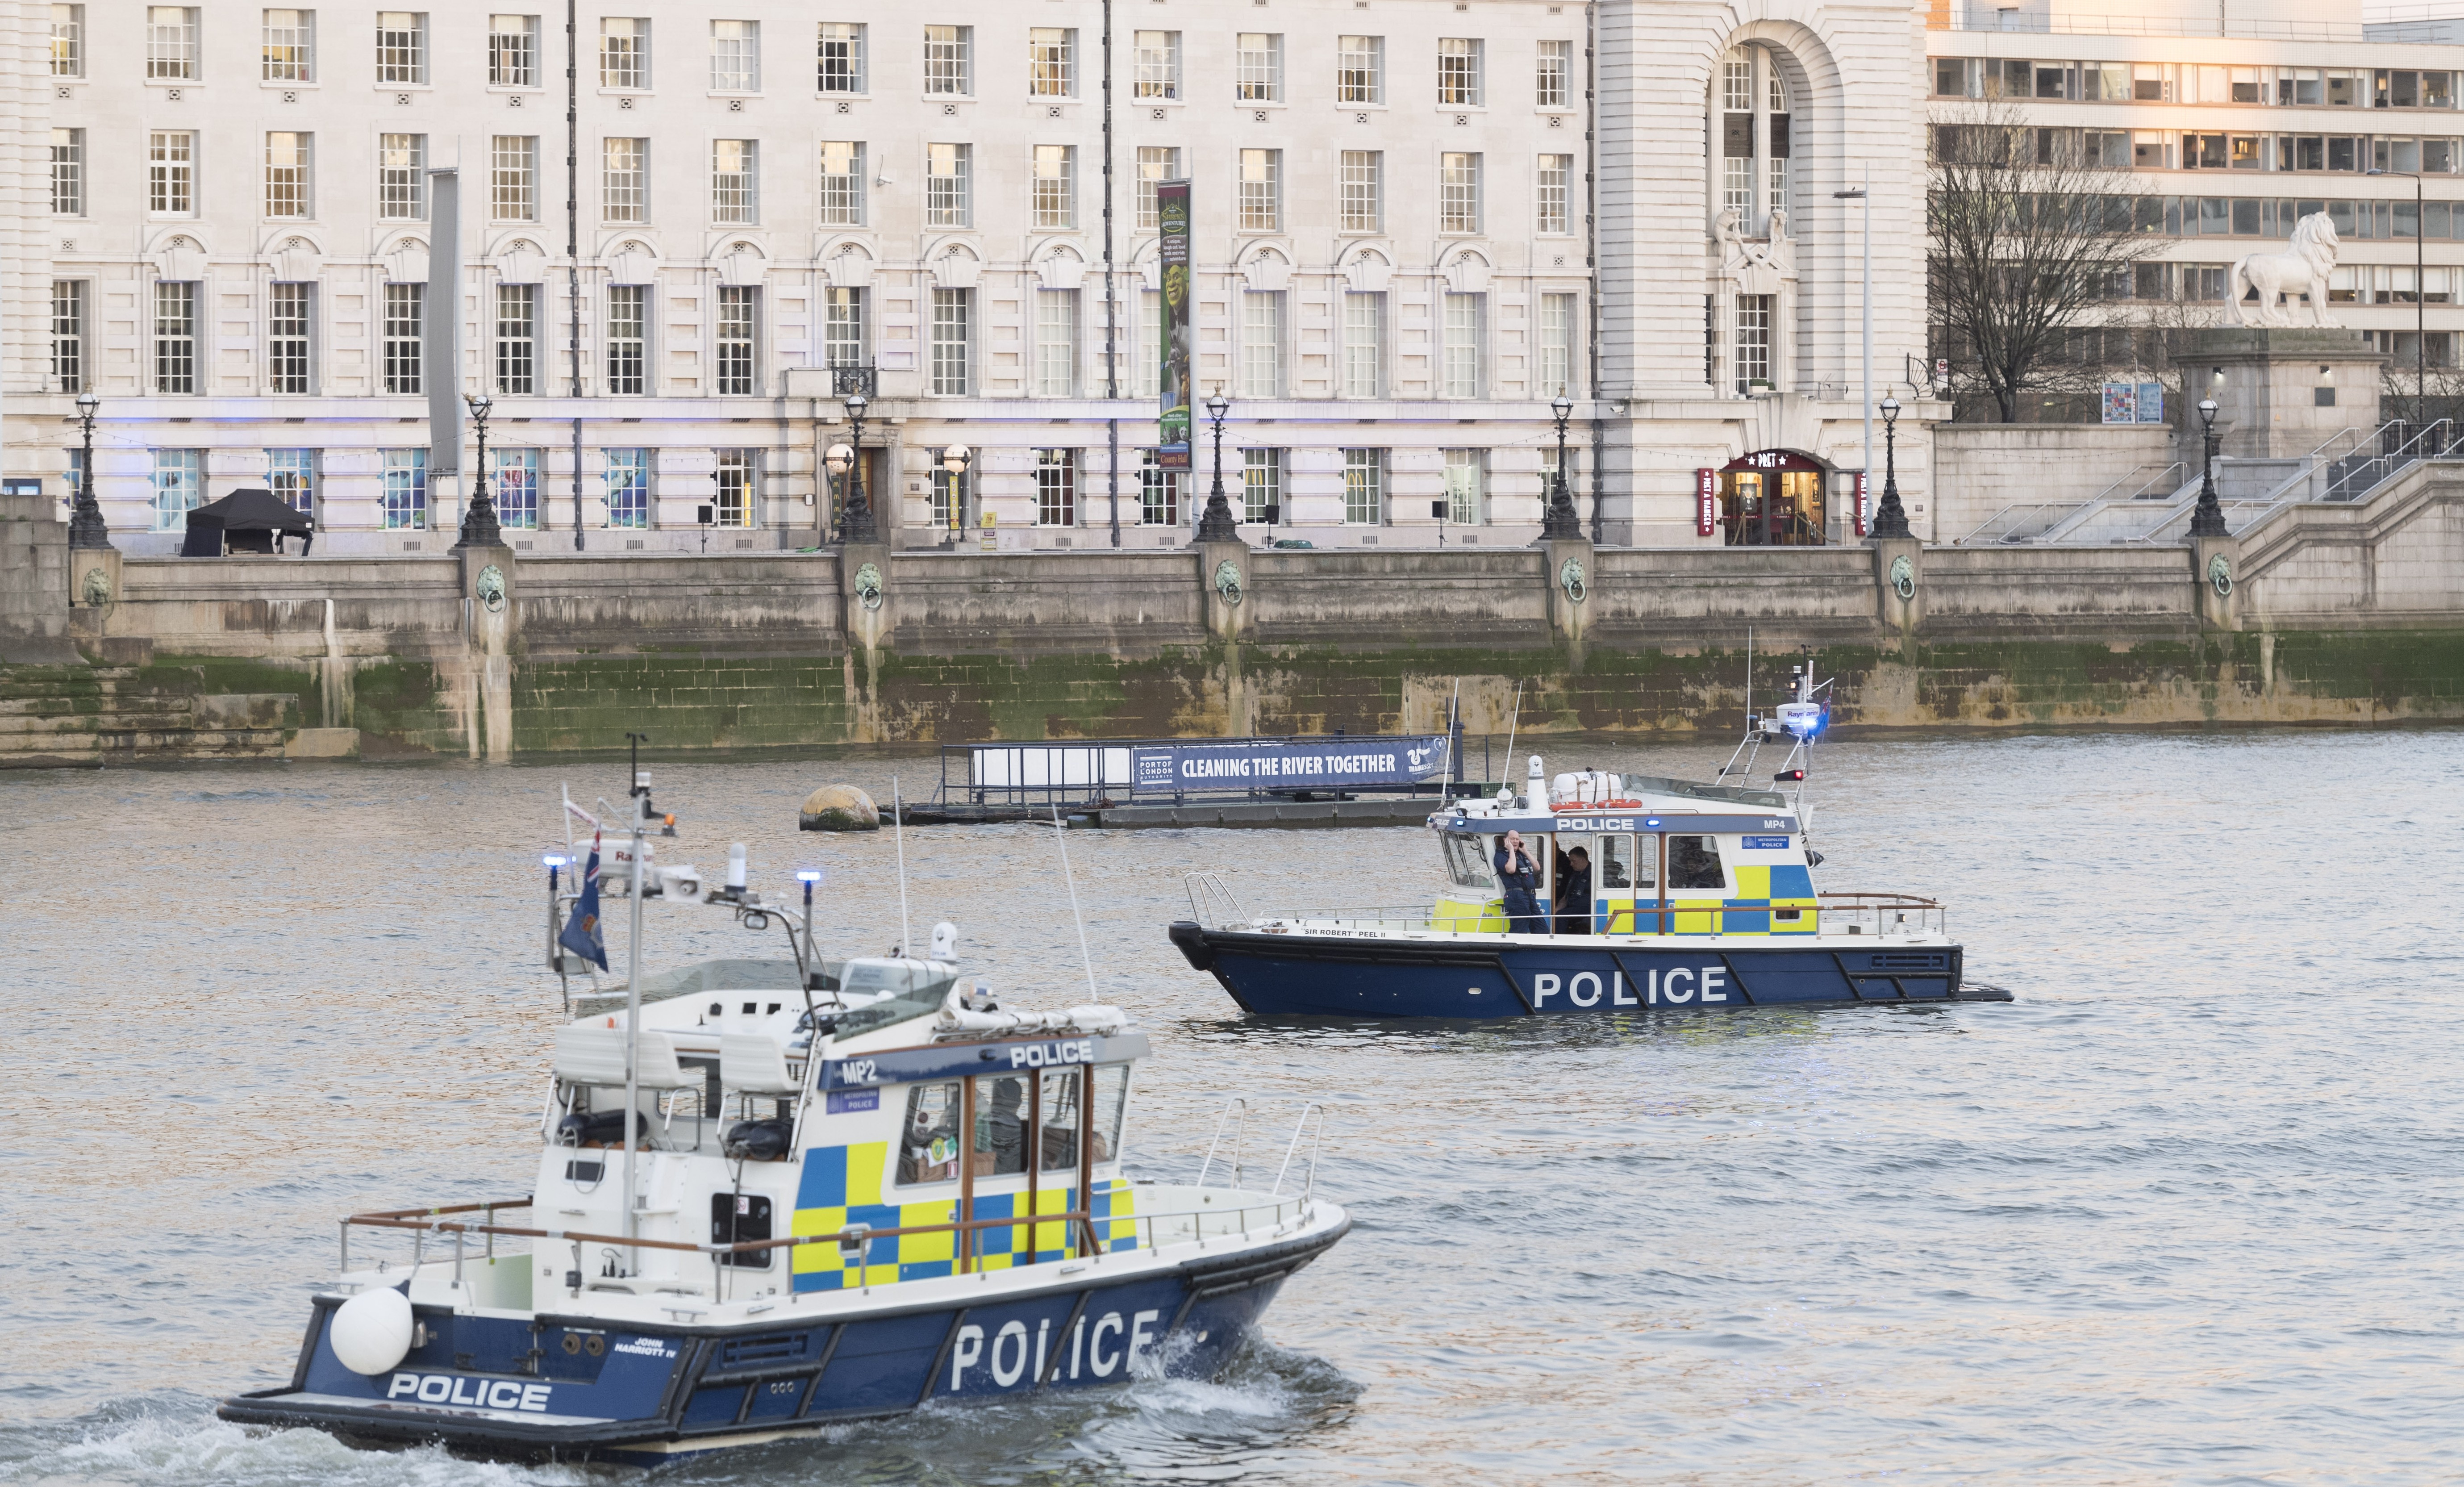 Катера полиции патрулируют акваторию Темзы неподалеку от здания британского парламента. Фото: &copy; РИА Новости/Алекс Макнотон